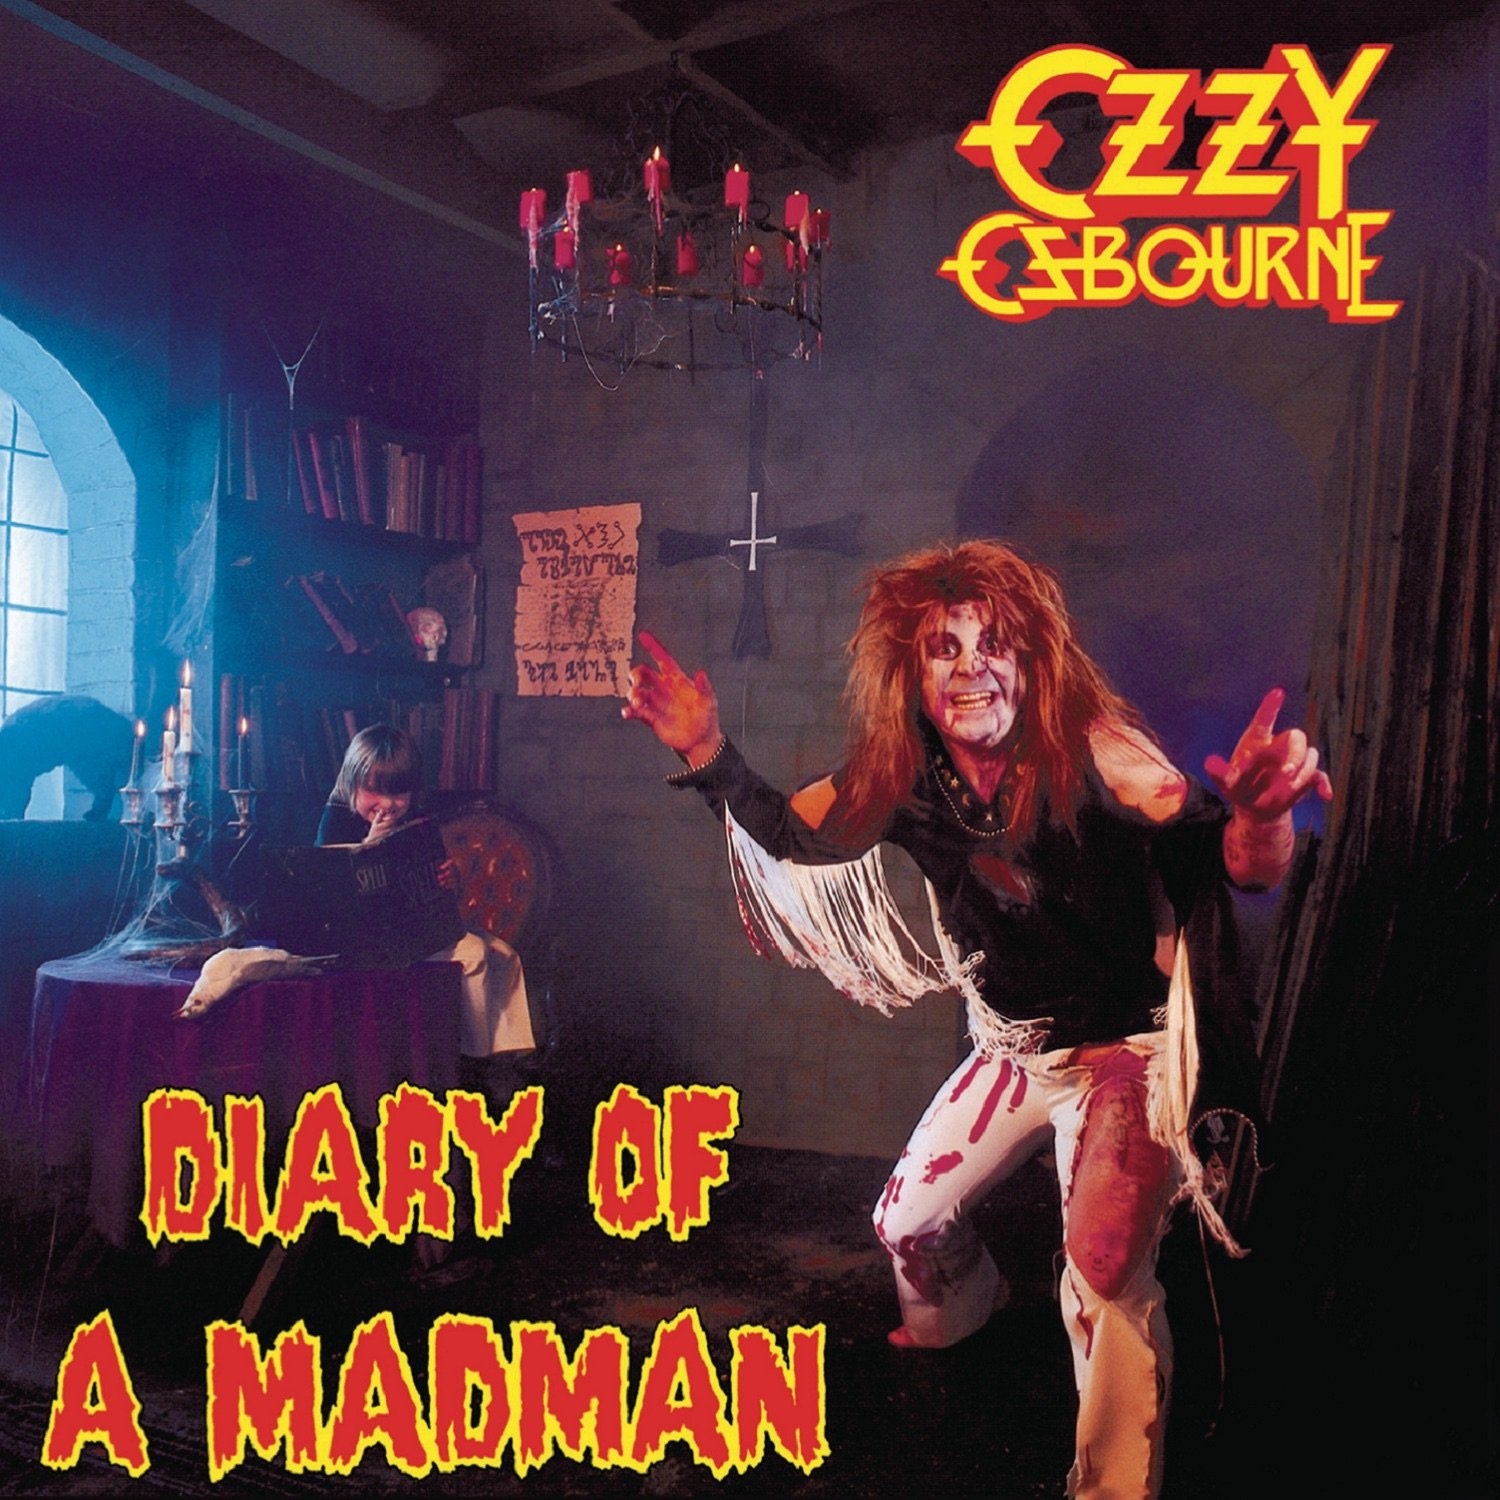 Металл Sony Osbourne, Ozzy - Diary of a Madman (40th anniversary) (Limited Marbled Vinyl) поп sony shakira laundry service 20th anniversary colour vinyl